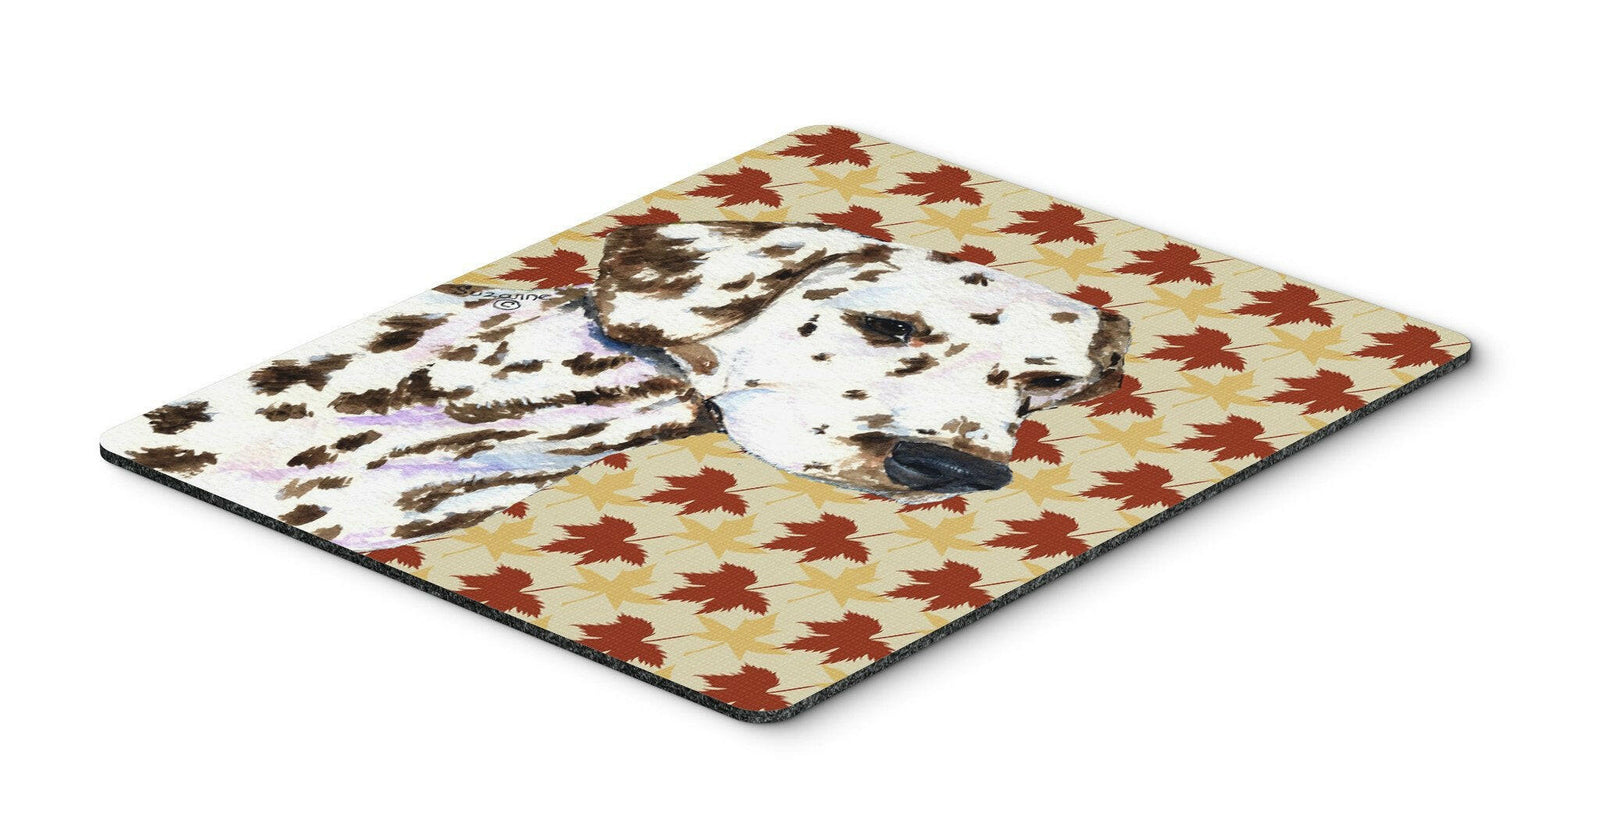 Dalmatian Fall Leaves Portrait Mouse Pad, Hot Pad or Trivet by Caroline's Treasures